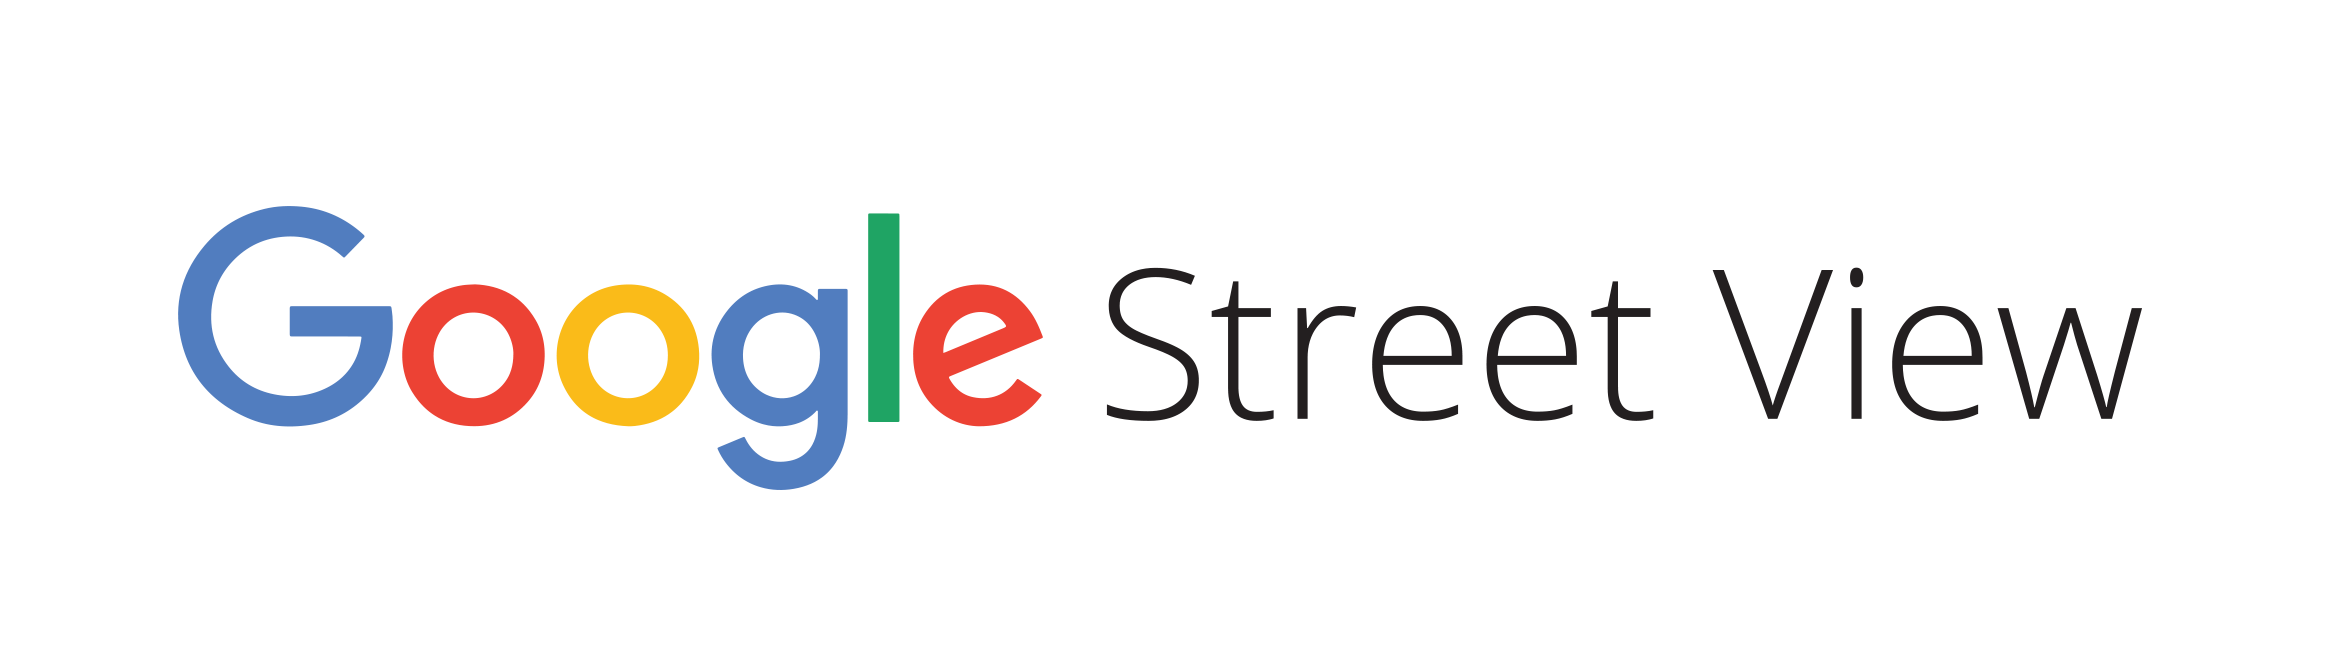 Google-Street-View-Logo.png